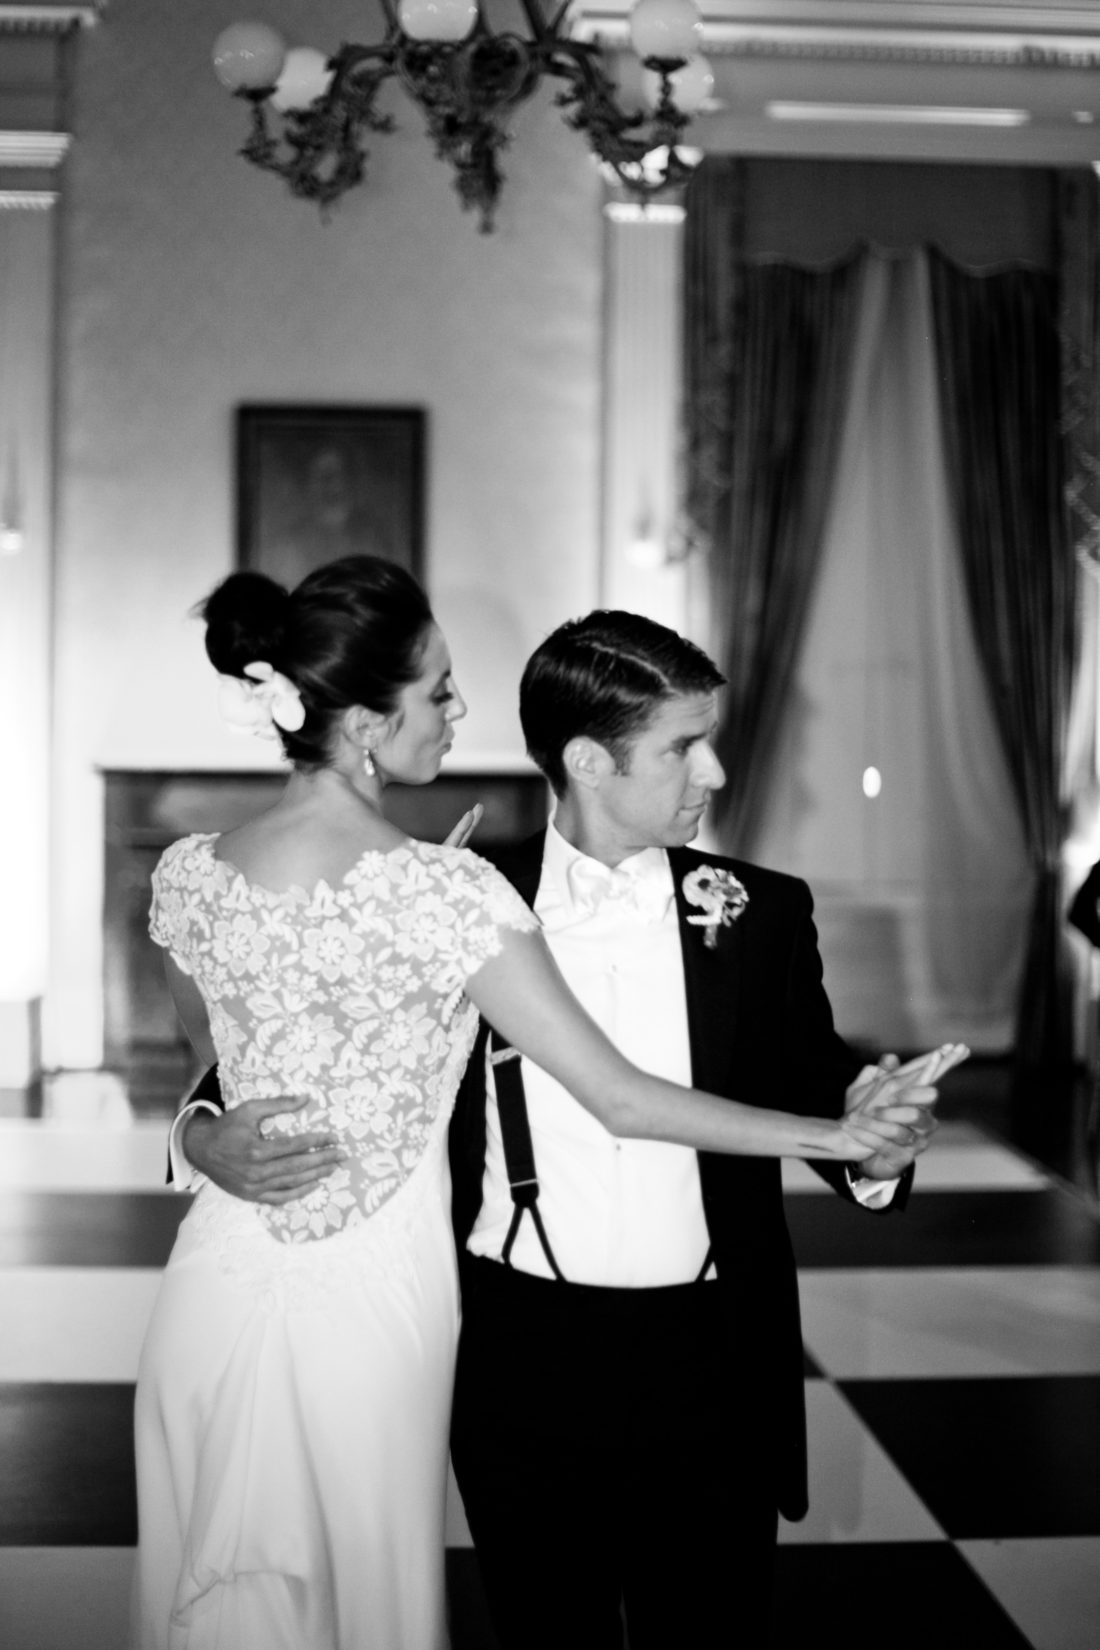 Eva Amurri Martino and Kyle Martino dancing together on their wedding day in Charleston, SC